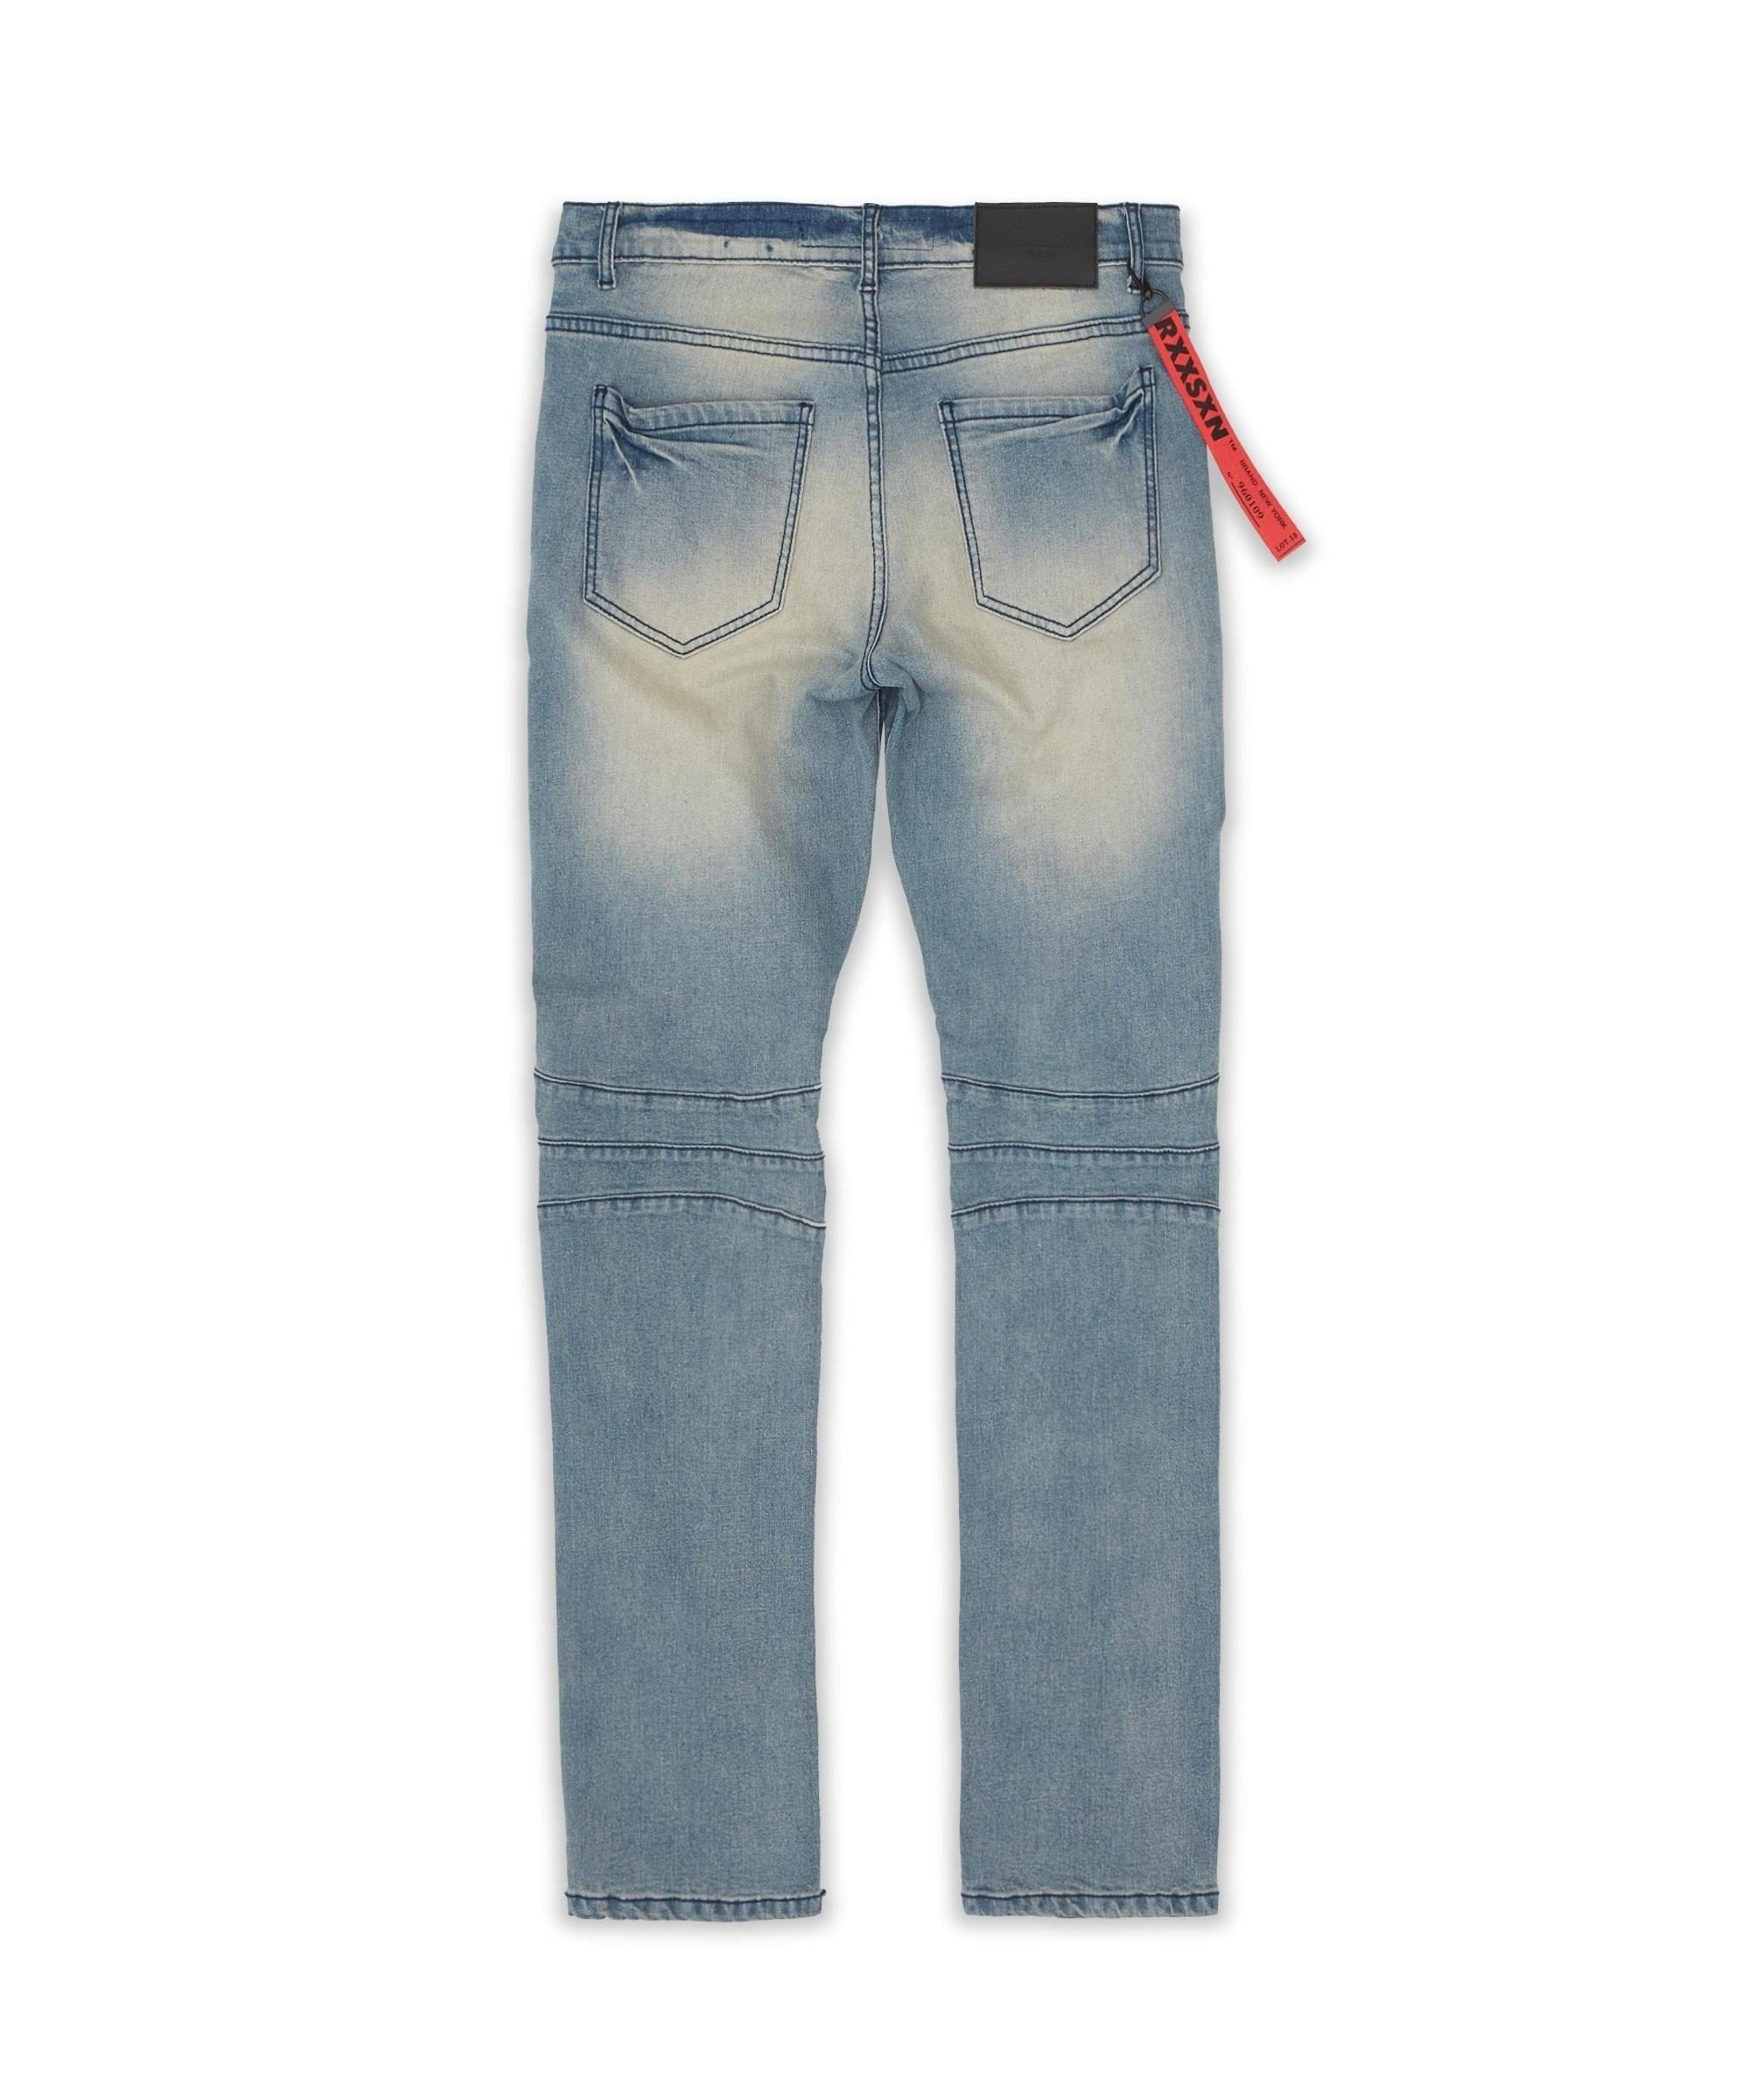 Alternate View 1 of Plus Size Alto Distressed Moto Jeans